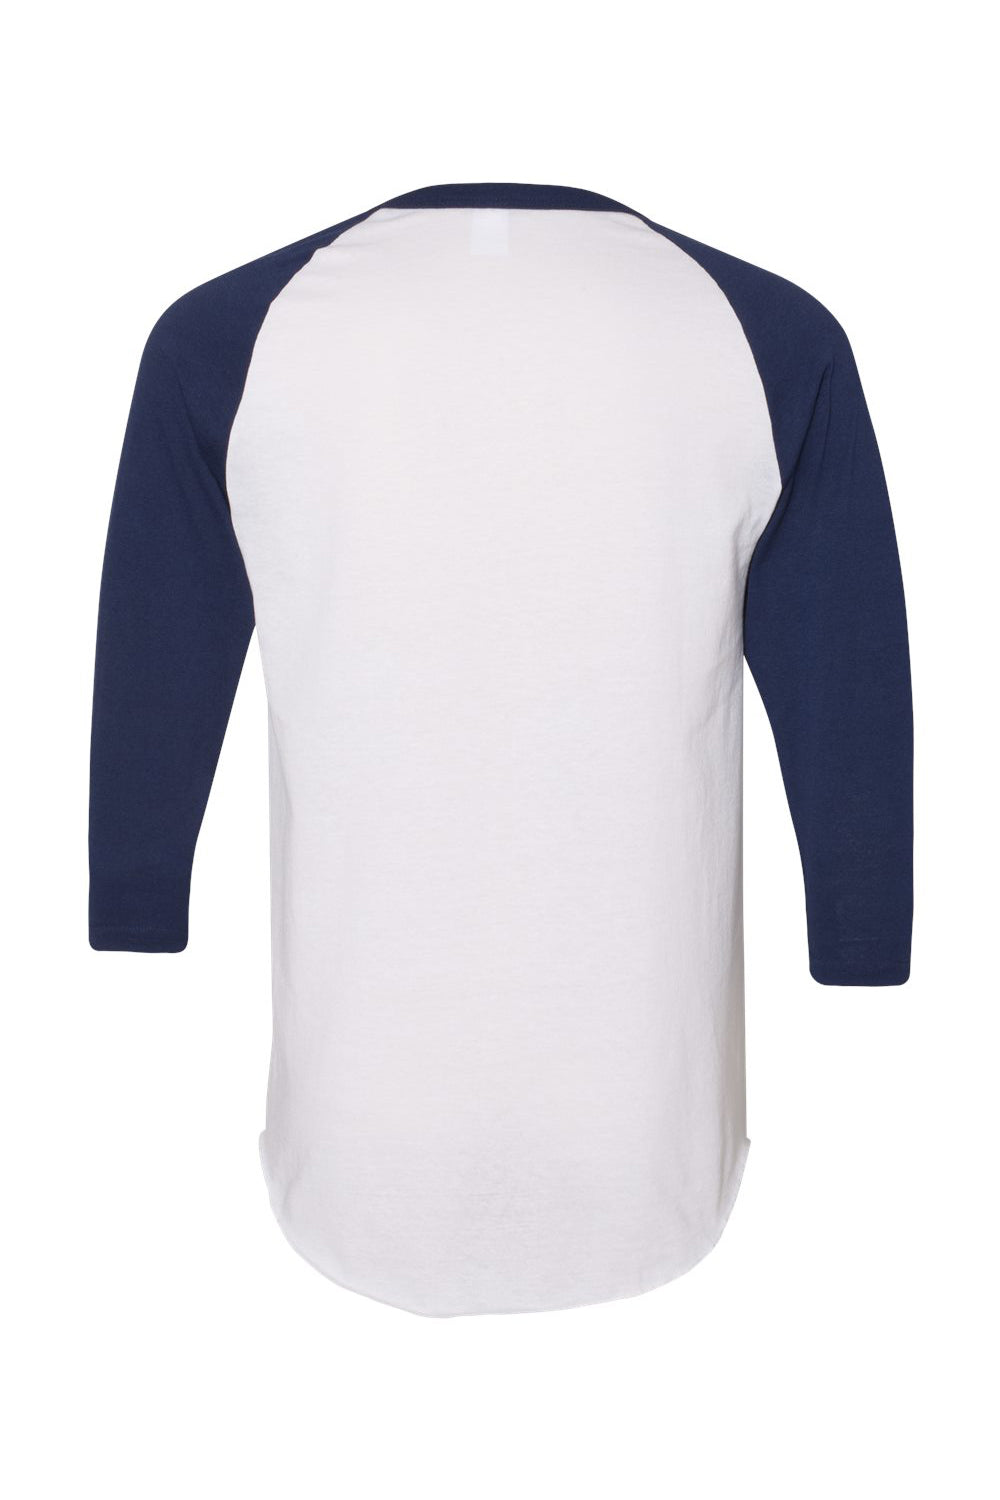 Augusta Sportswear 4420 Mens Raglan 3/4 Sleeve Crewneck T-Shirt White/Navy Flat Back